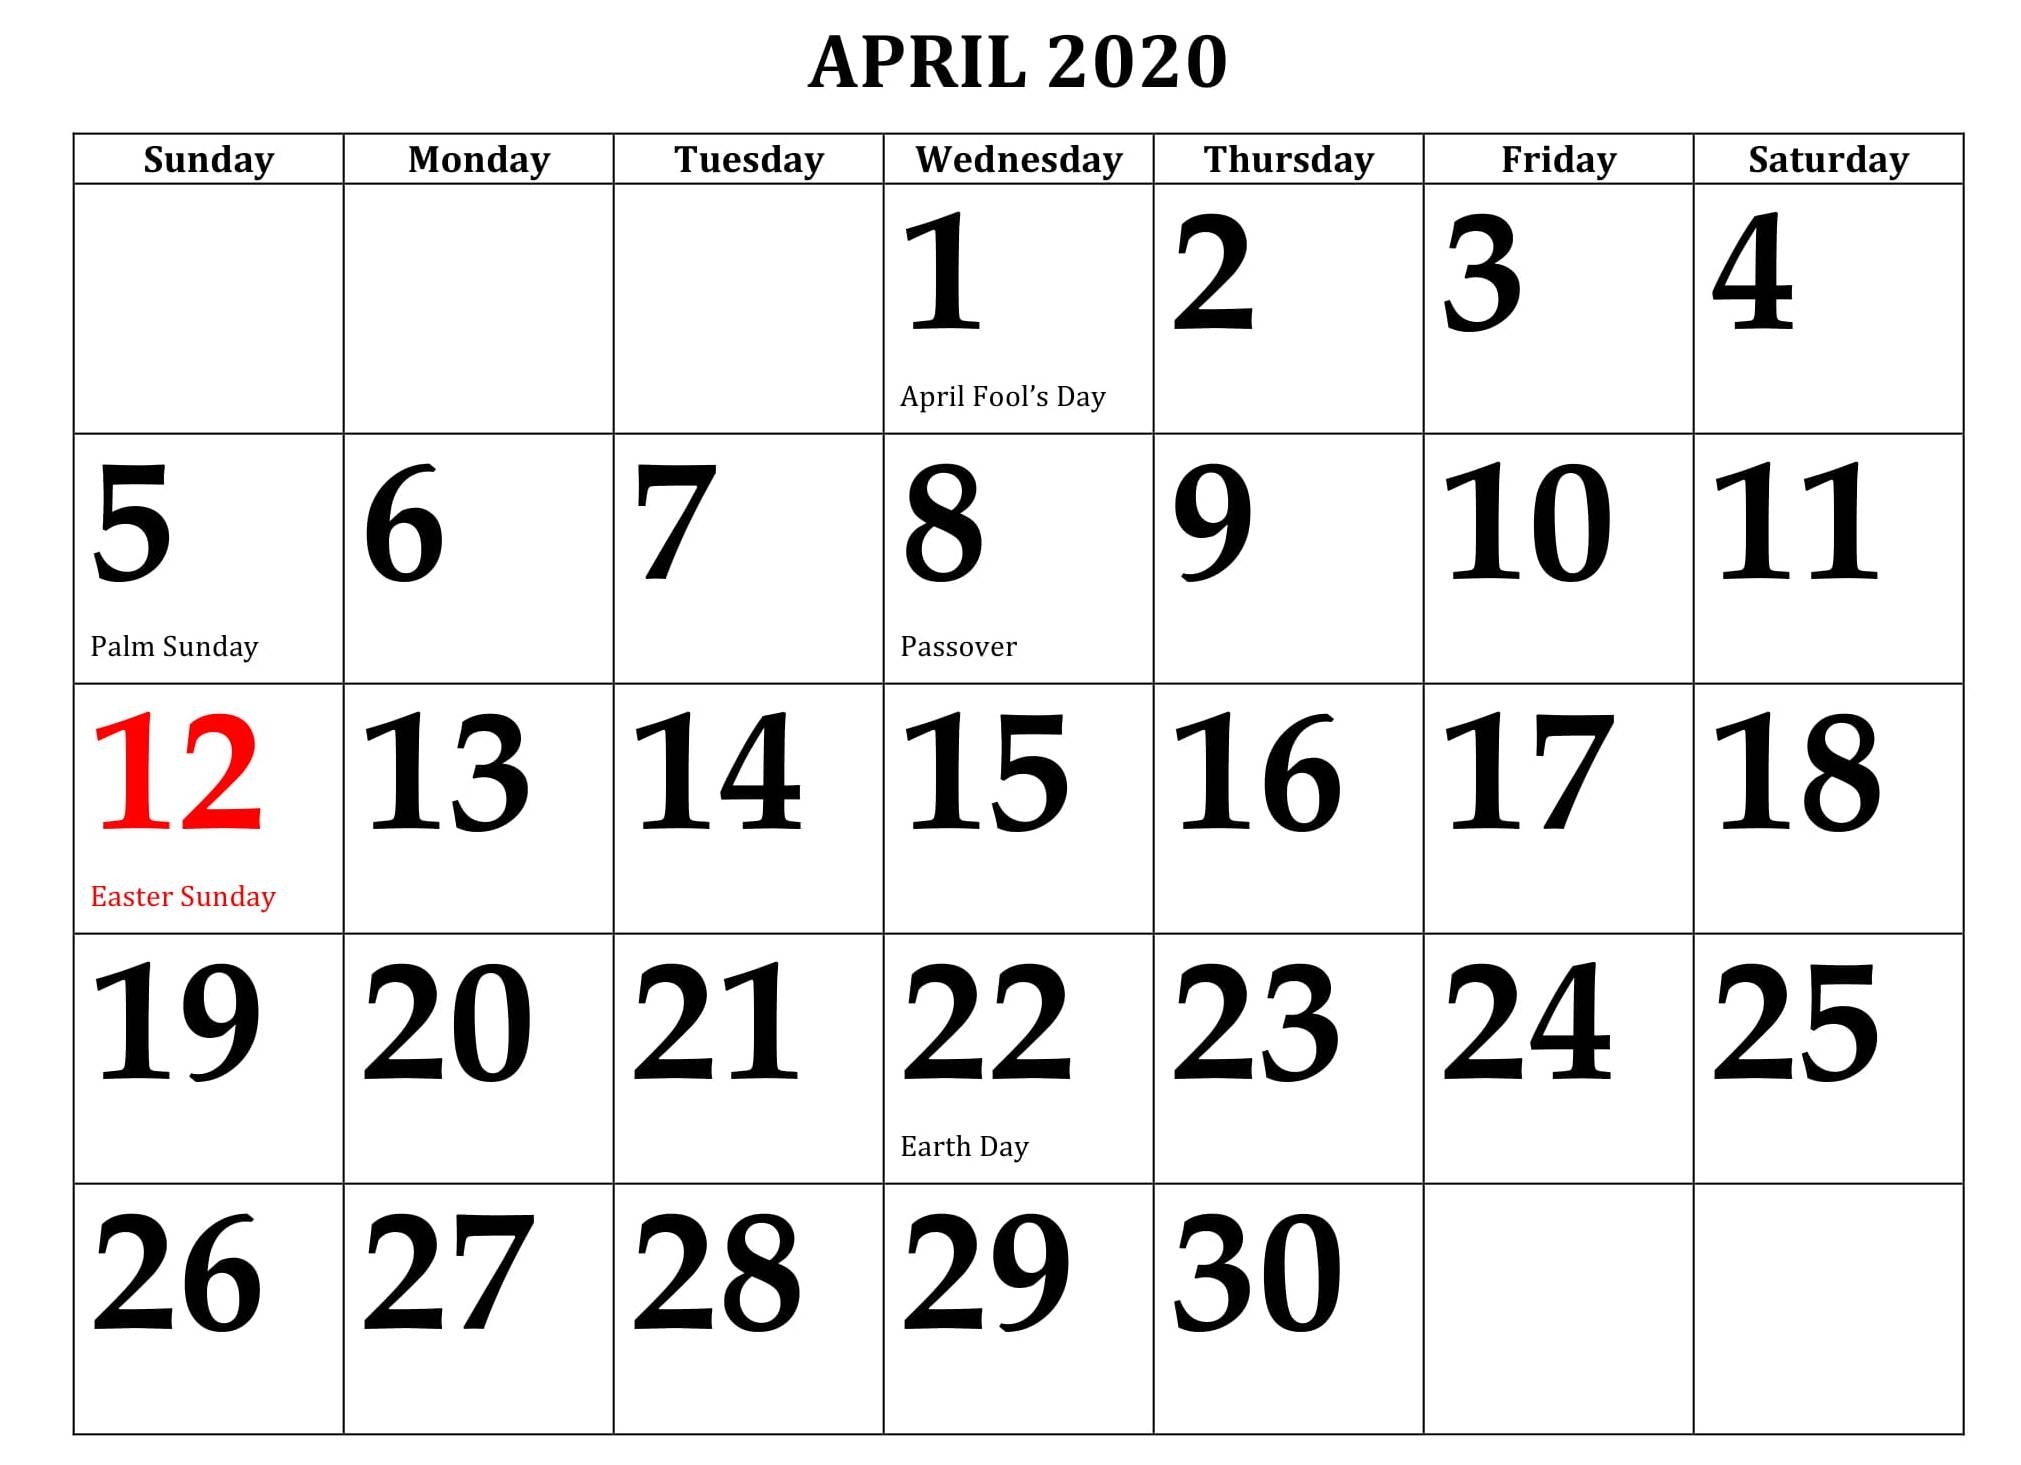 April 2020 Calendar With Holidays Template - 2019 Calendars Passover 2020 Calendar Date